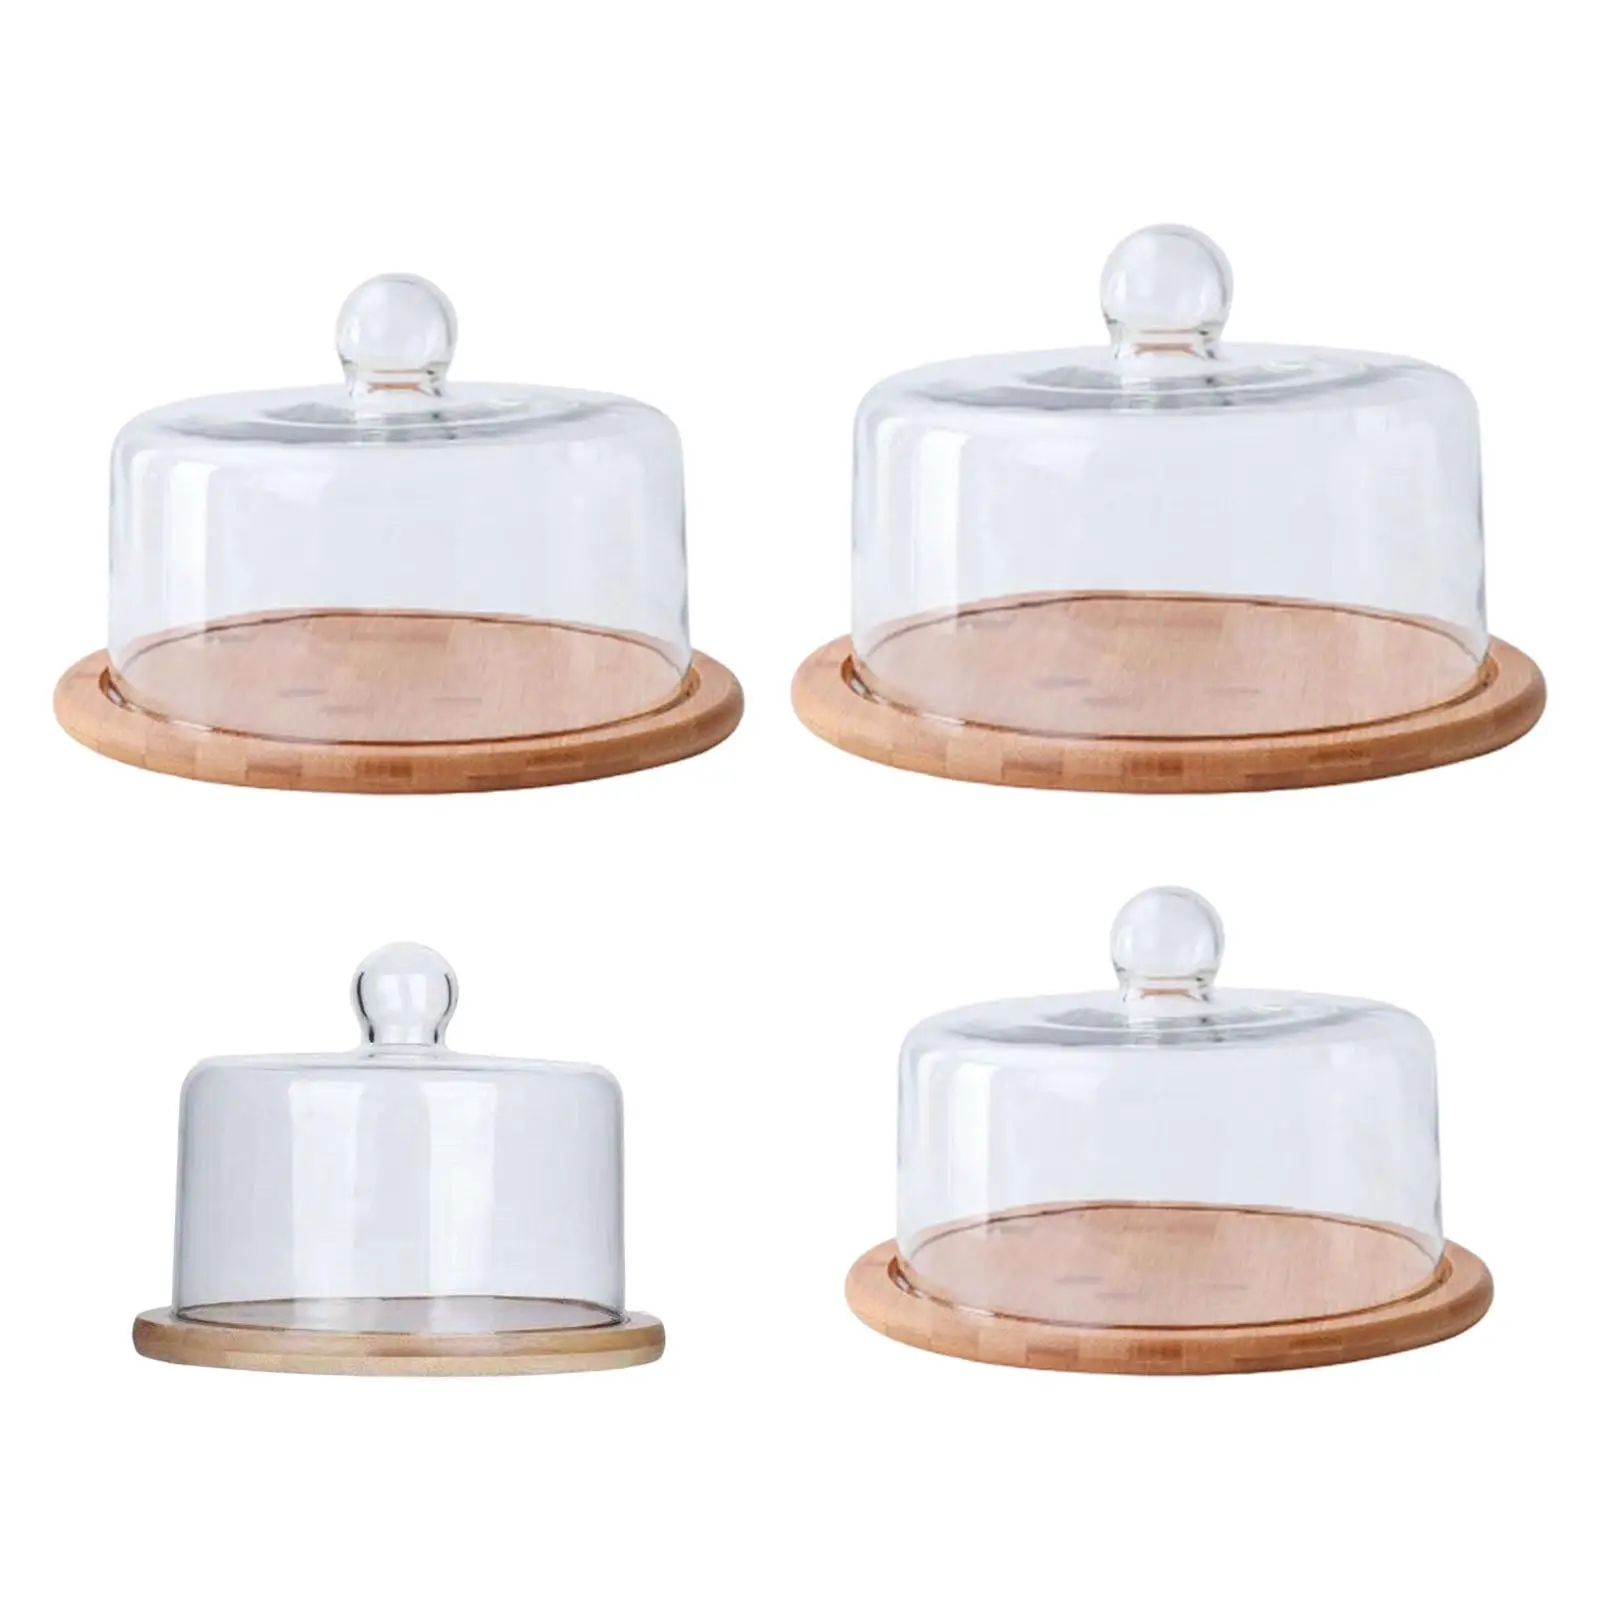 Wood Cake  Dome, Cake Pan Salad Serving Platter Cake Display Server Tray Rotating Cake Stand, Cake Holder for Kitchen Weddings